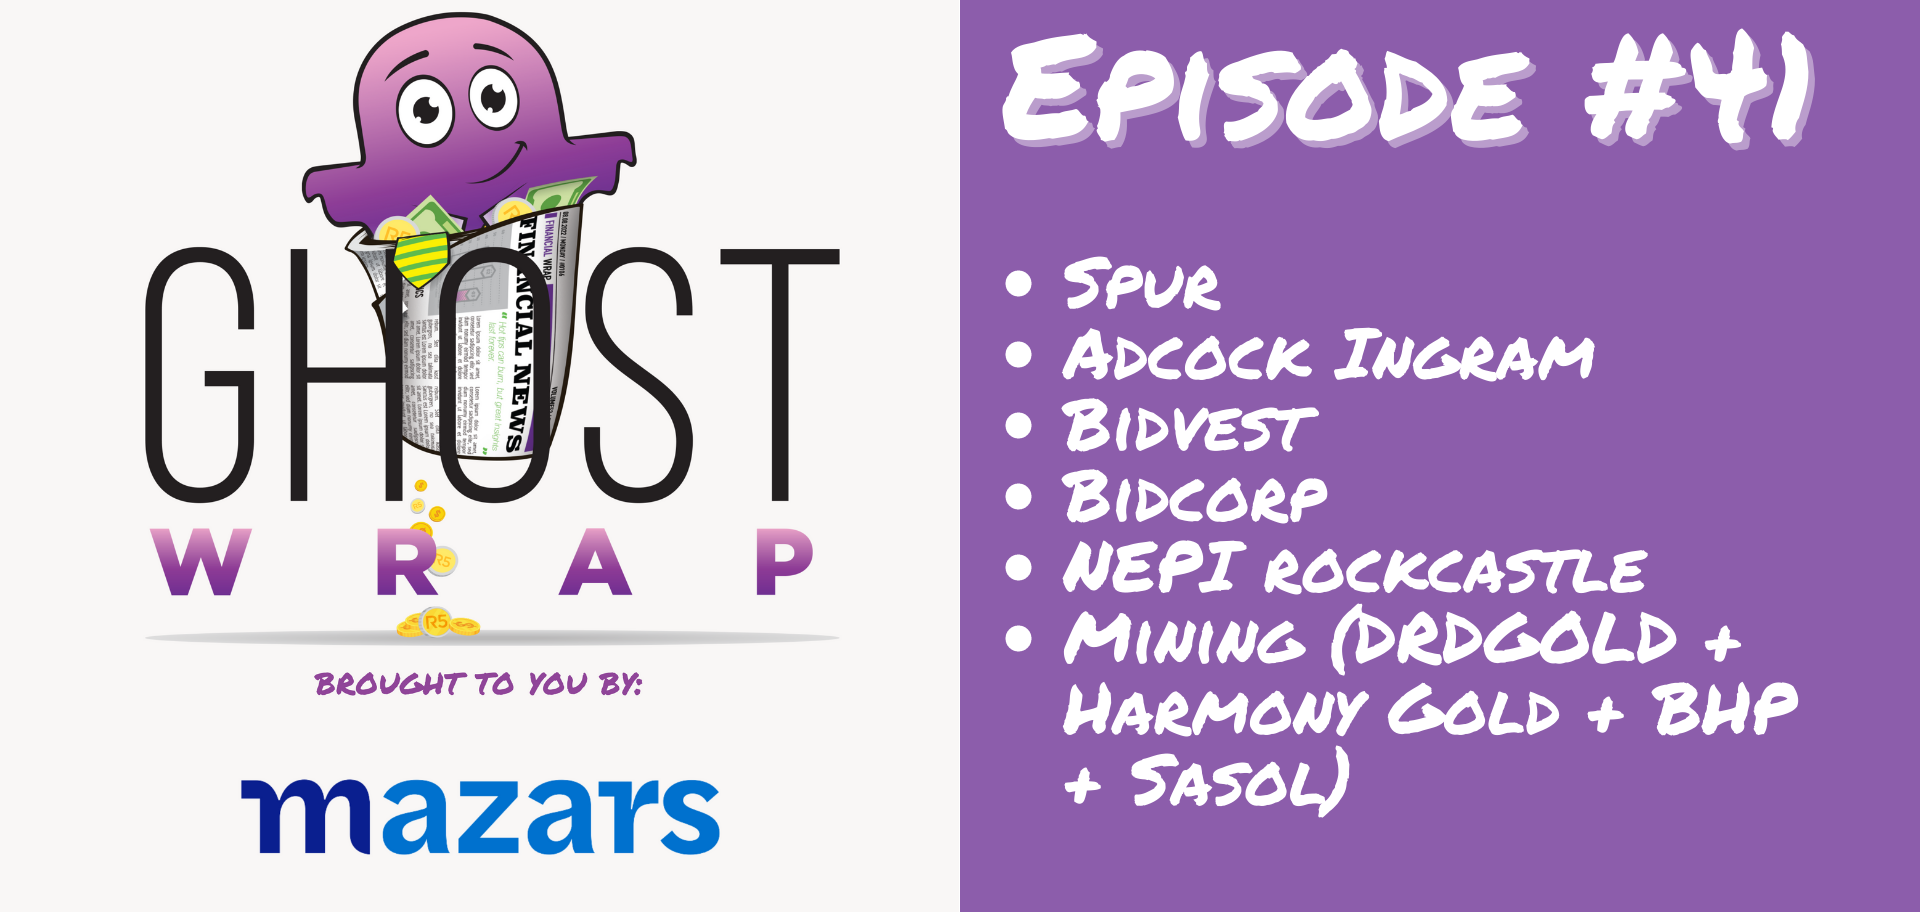 Ghost Wrap #41 (Spur | Adcock Ingram | Bidvest | Bidcorp | NEPI Rockcastle | DRDGOLD | Harmony Gold | BHP | Sasol)